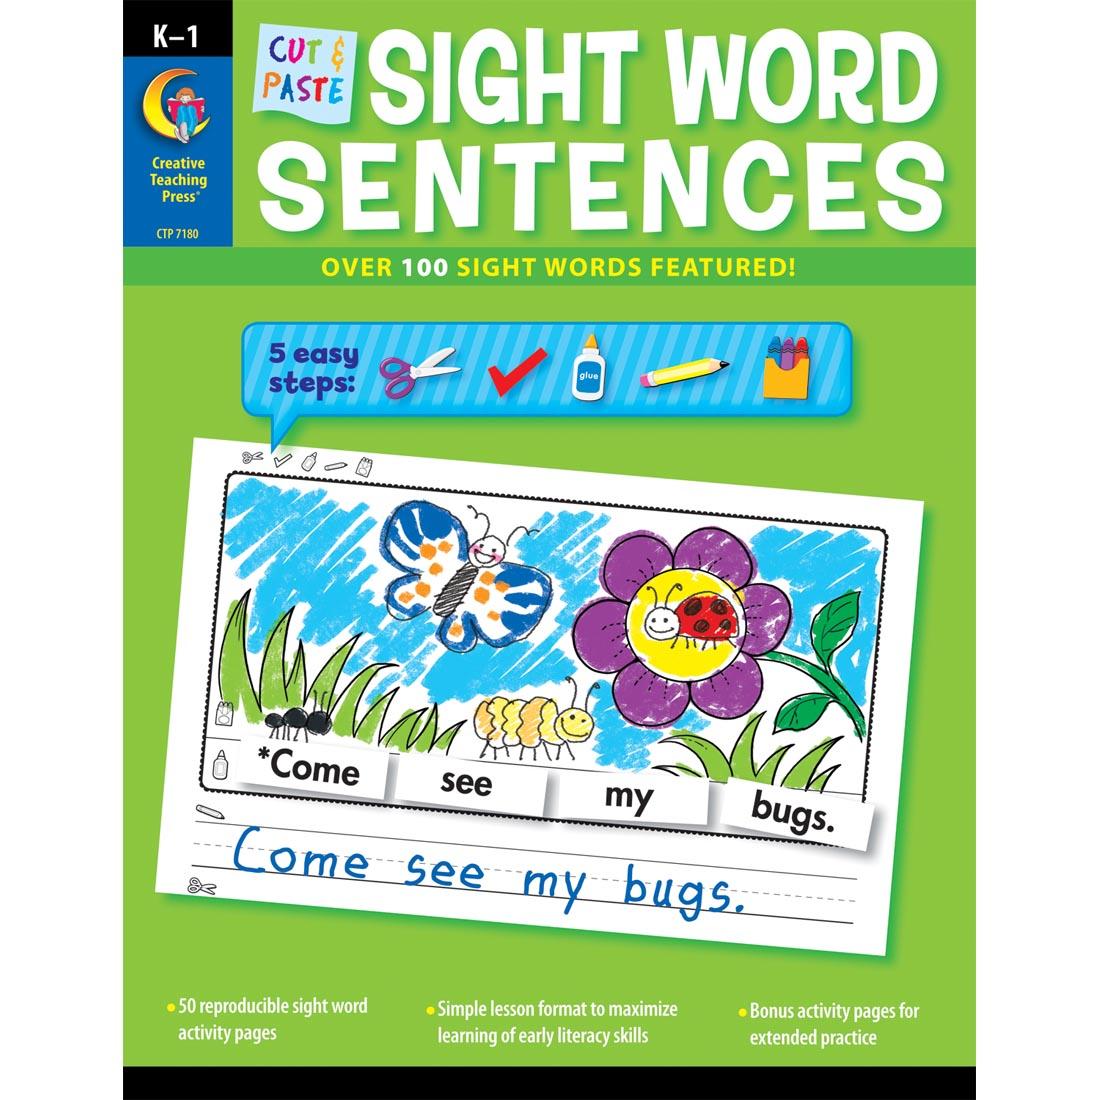 Cut & Paste Sight Words Sentences by Creative Teaching Press